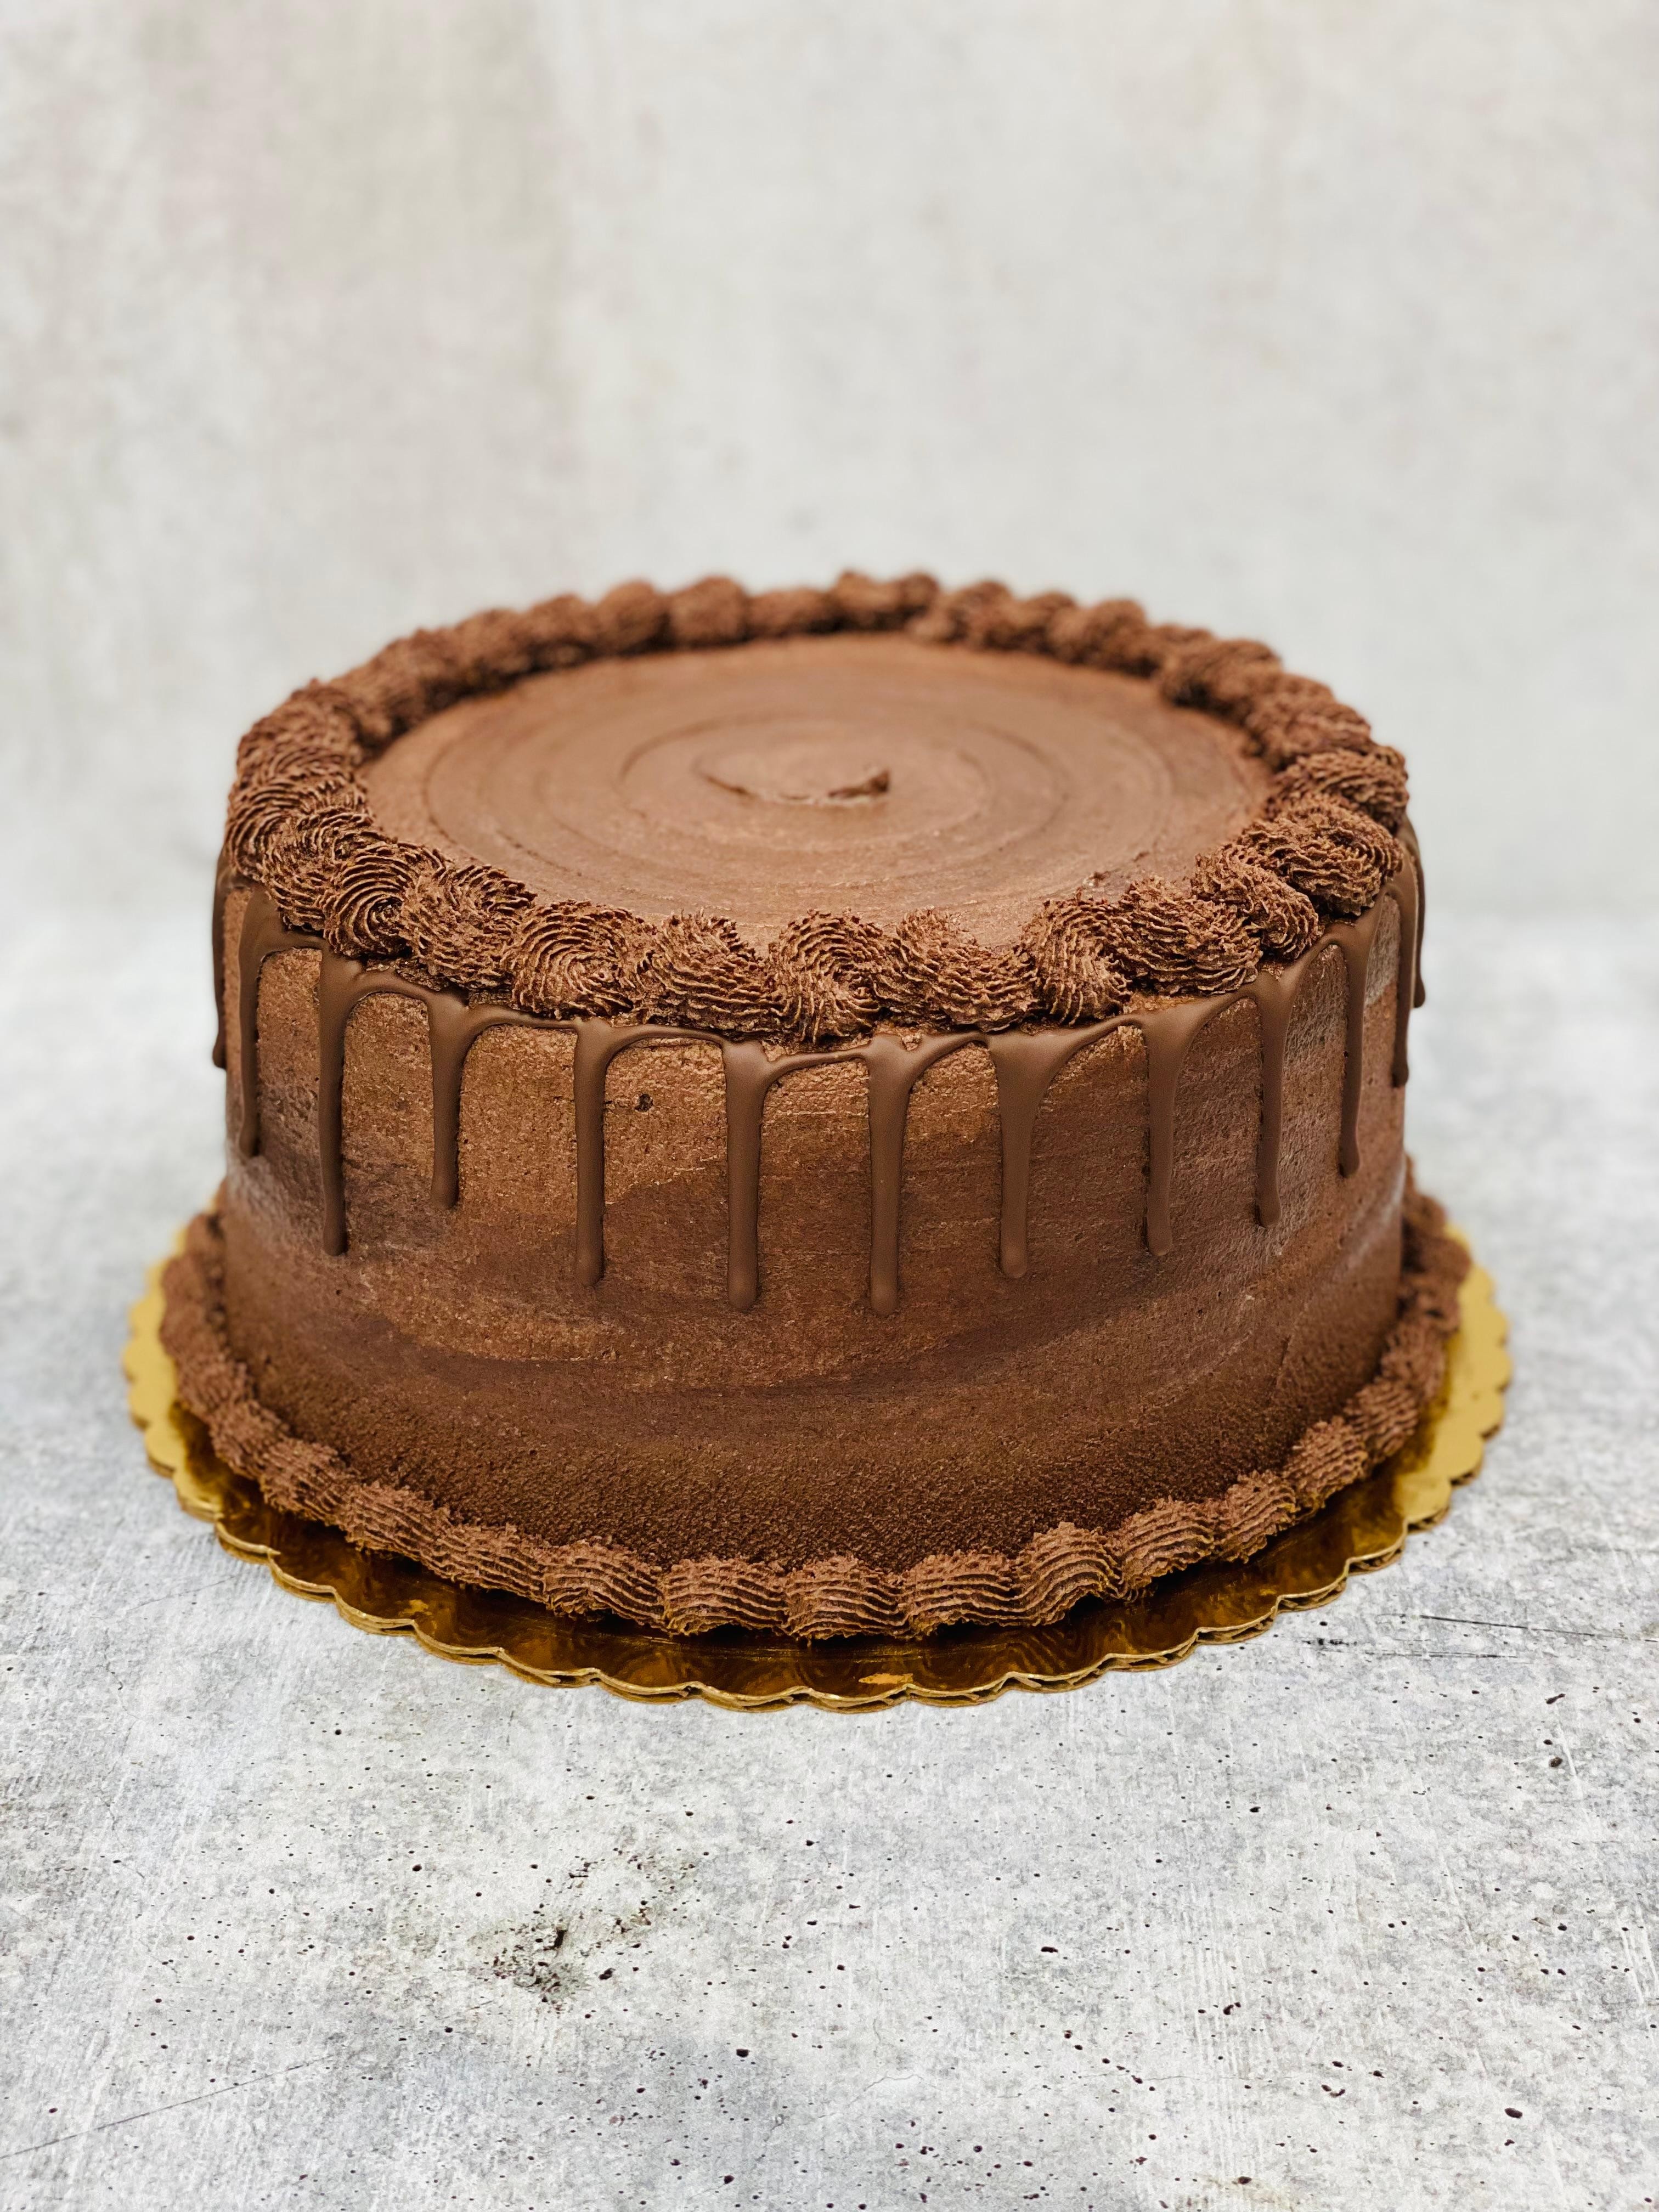 8” Chocolate Fudge Cake